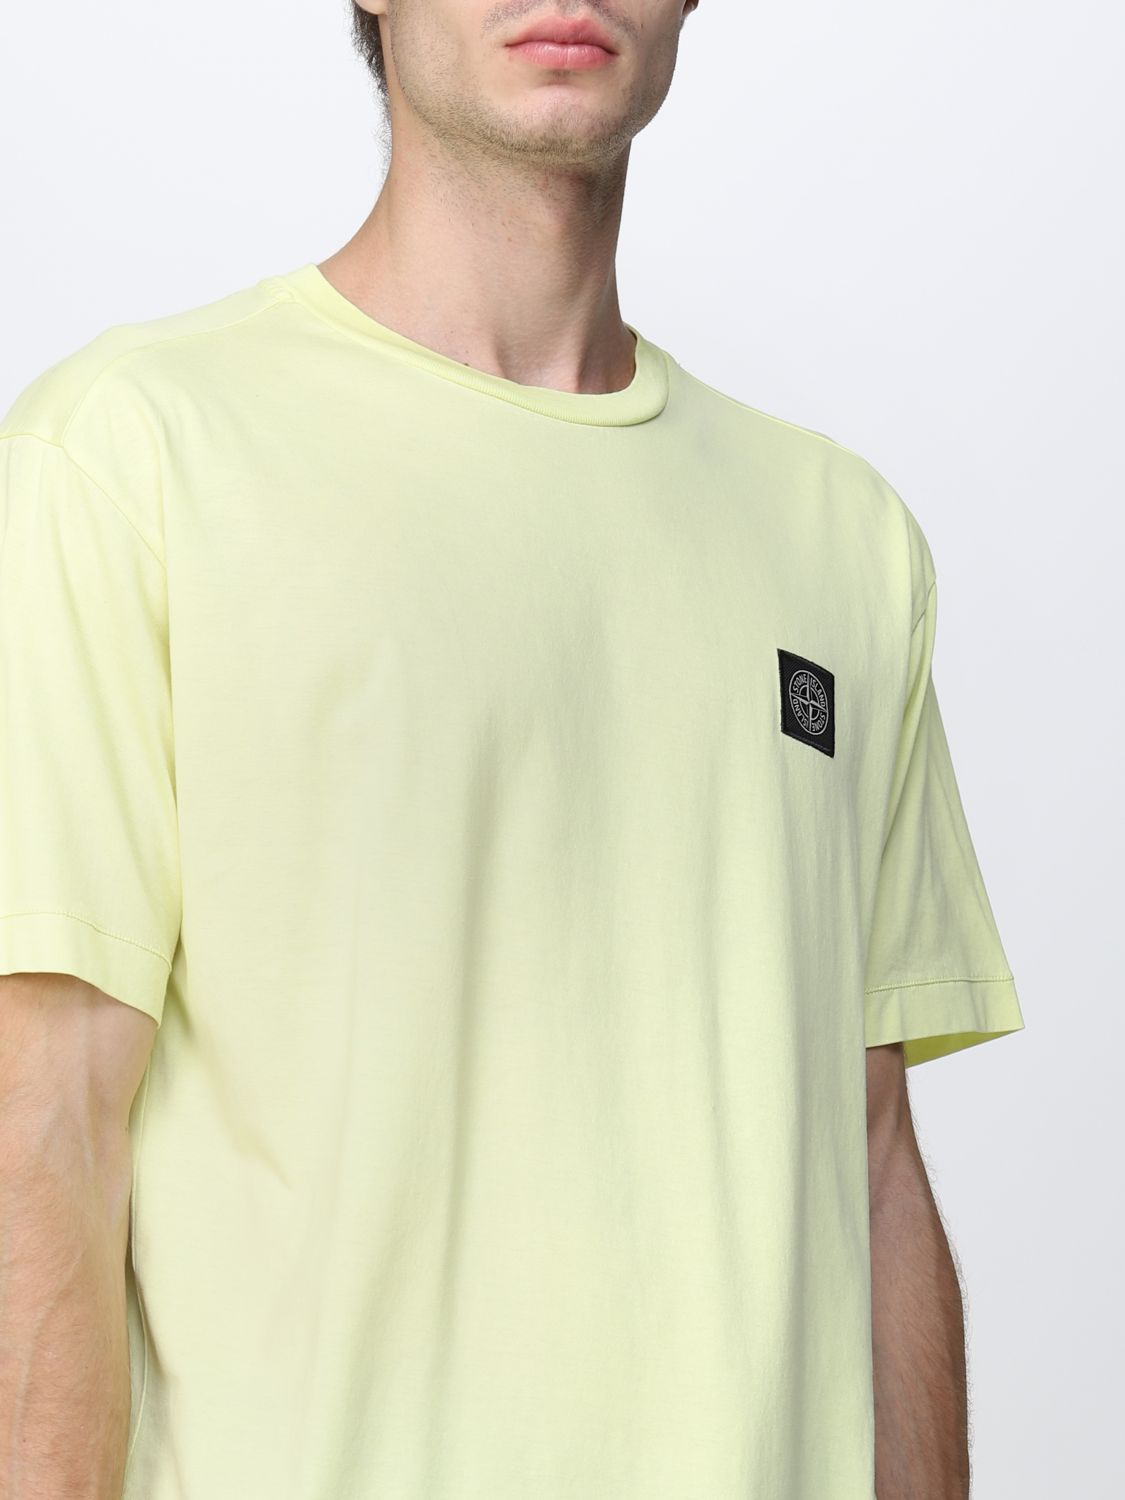 T-shirt Stone Island: Stone Island t-shirt for men lemon 5